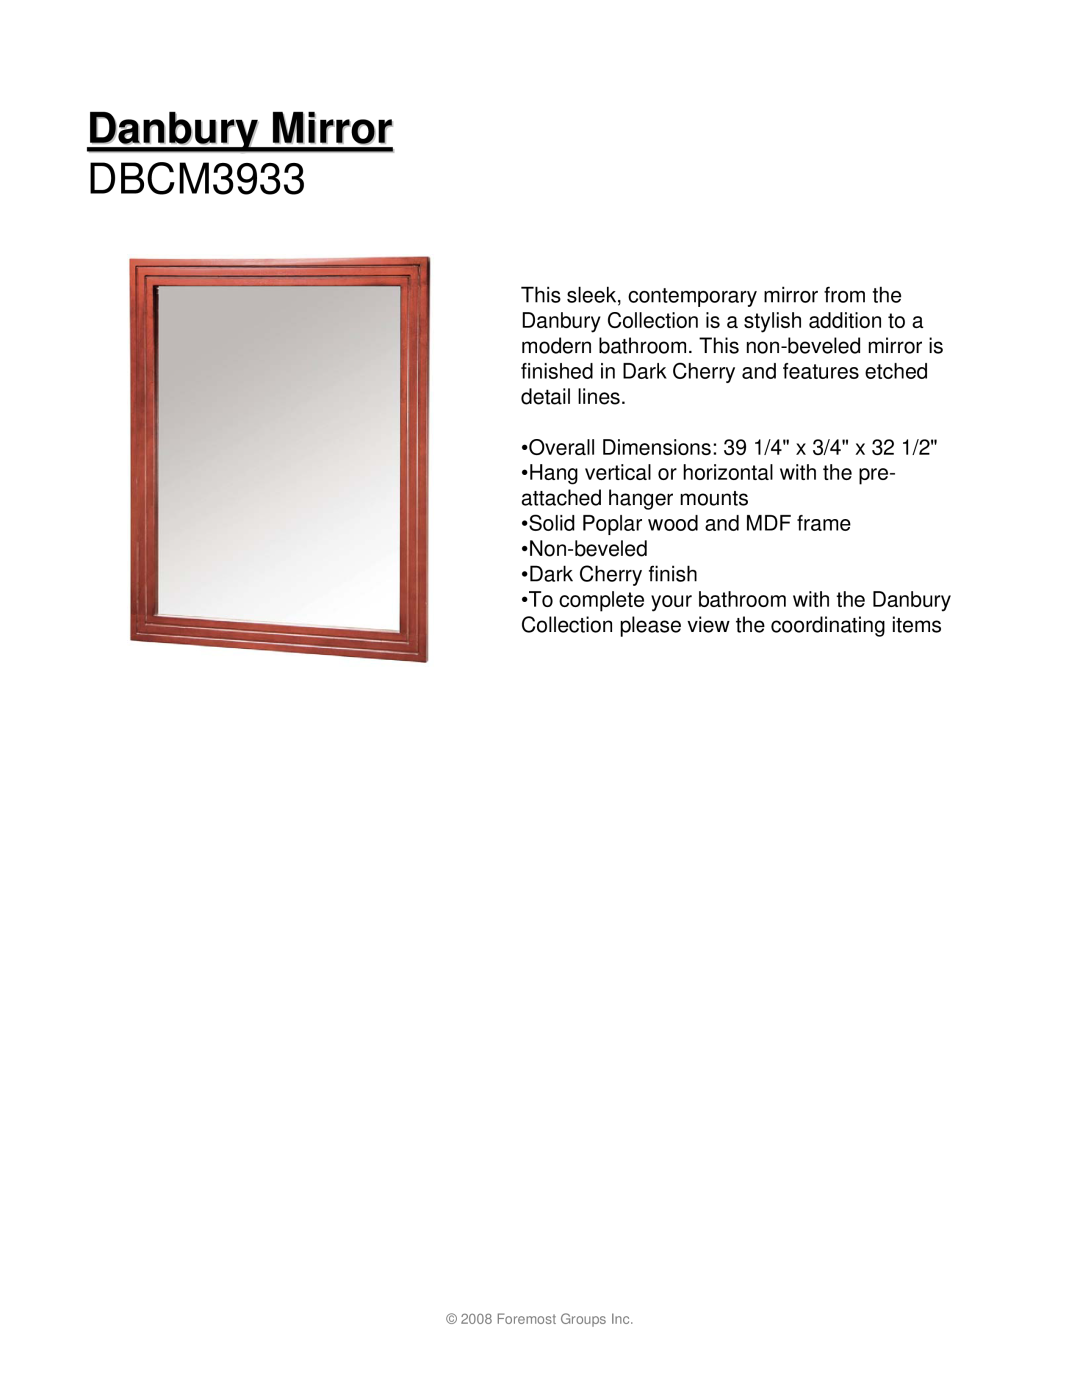 Husky DBCT1757, DBCA4222 dimensions Danbury Mirror, DBCM3933 